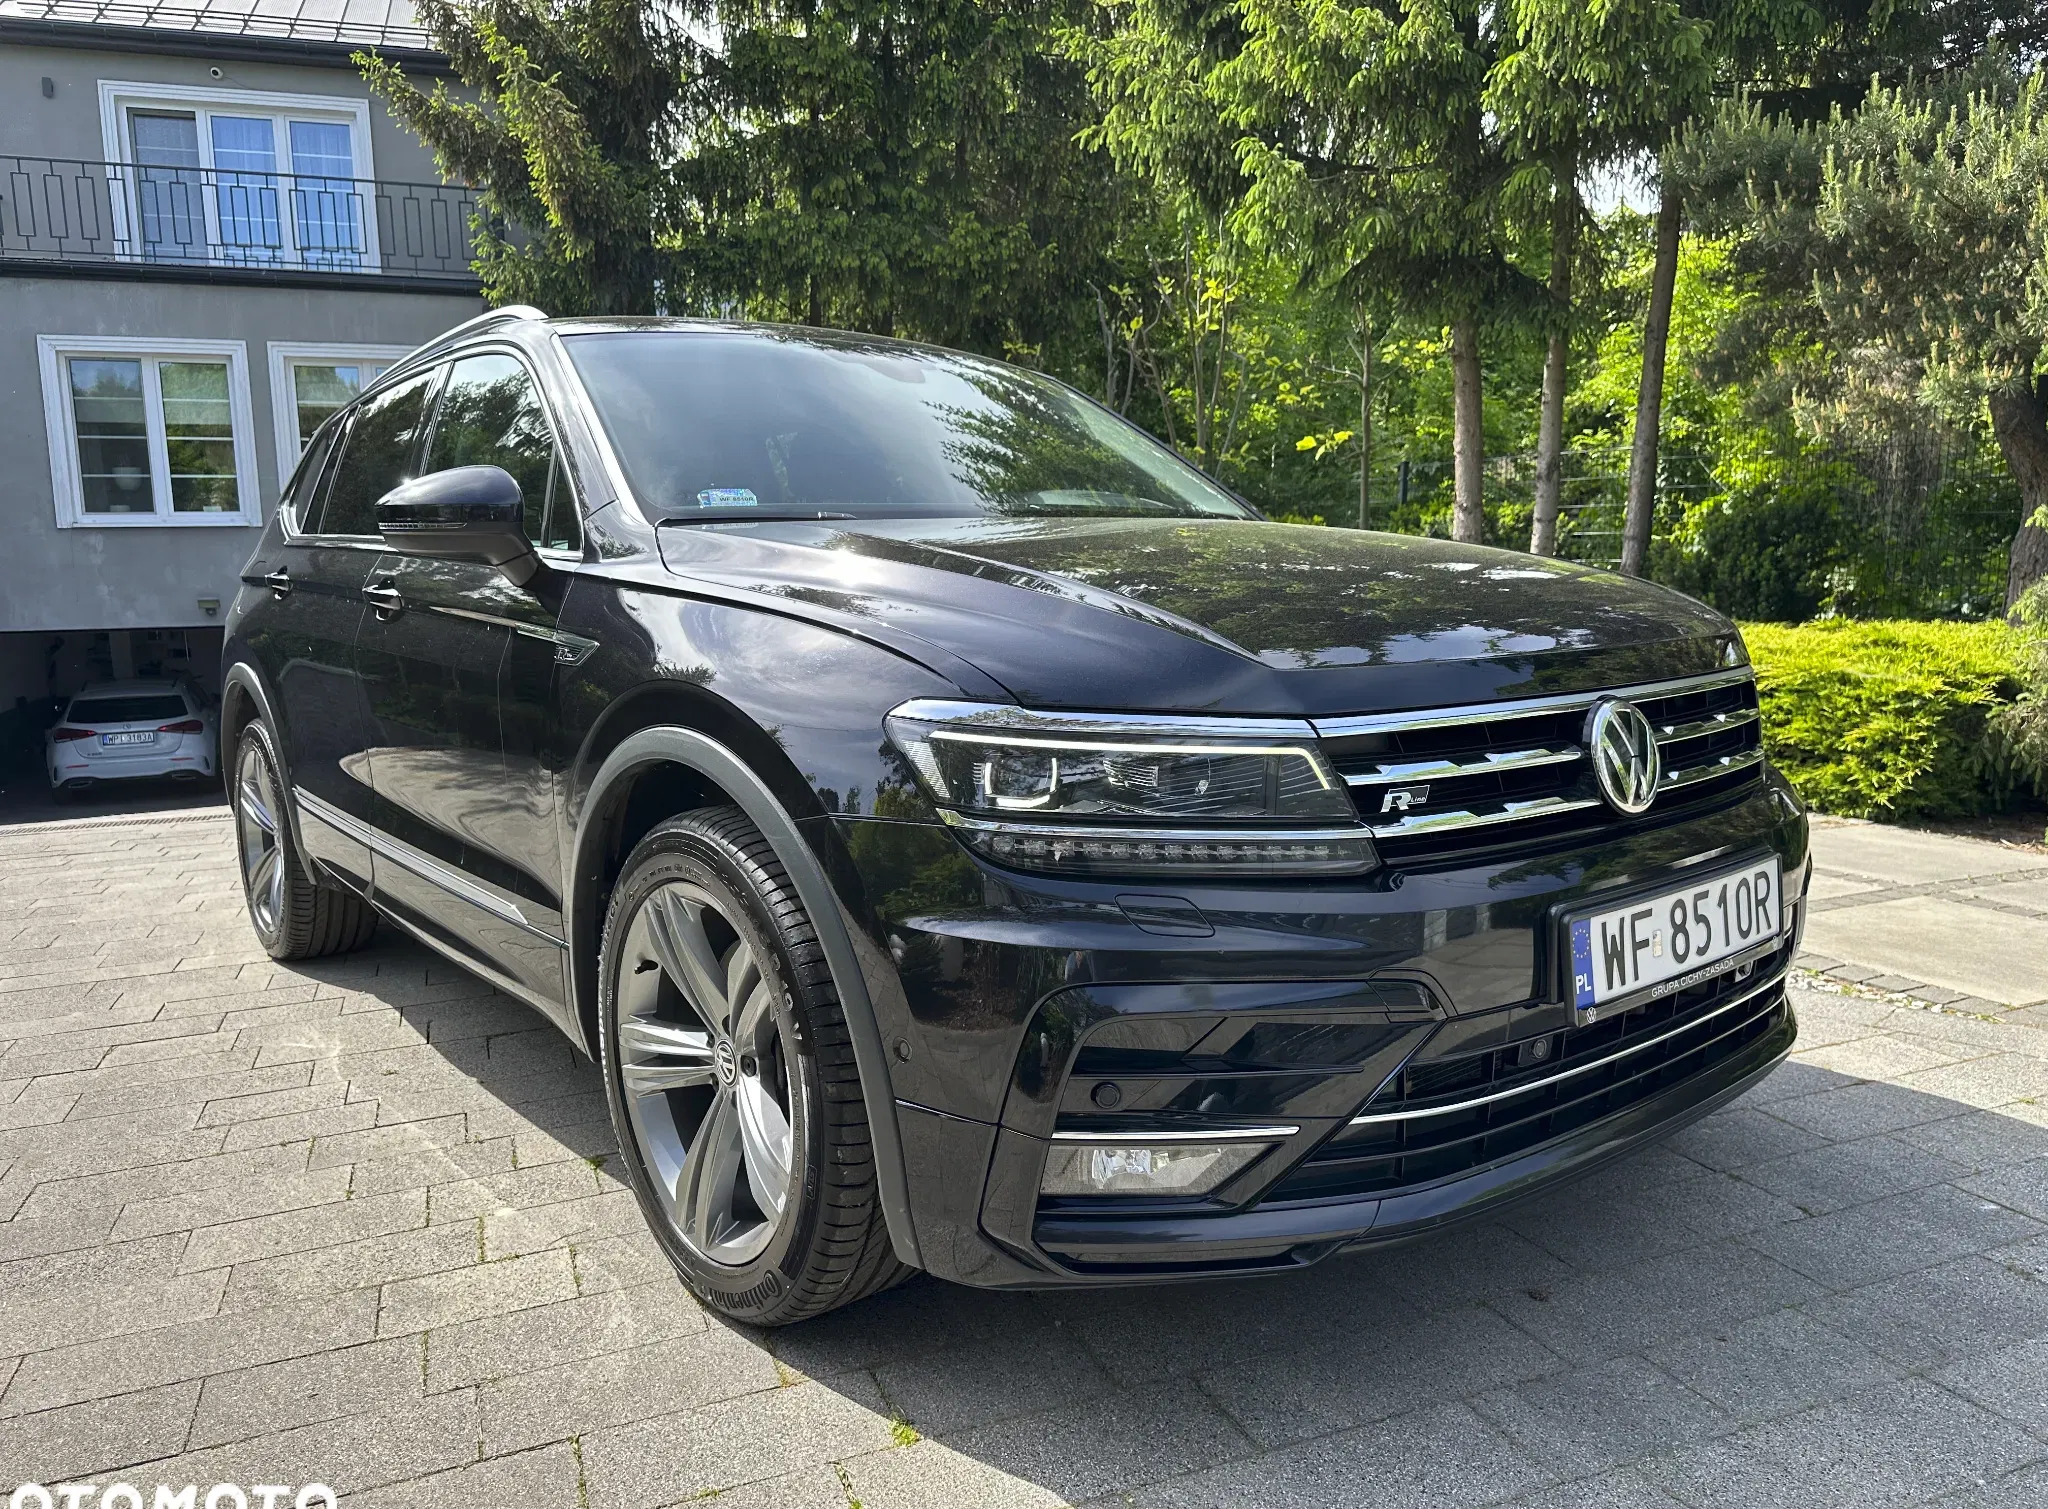 volkswagen tiguan Volkswagen Tiguan cena 141450 przebieg: 135000, rok produkcji 2018 z Warszawa